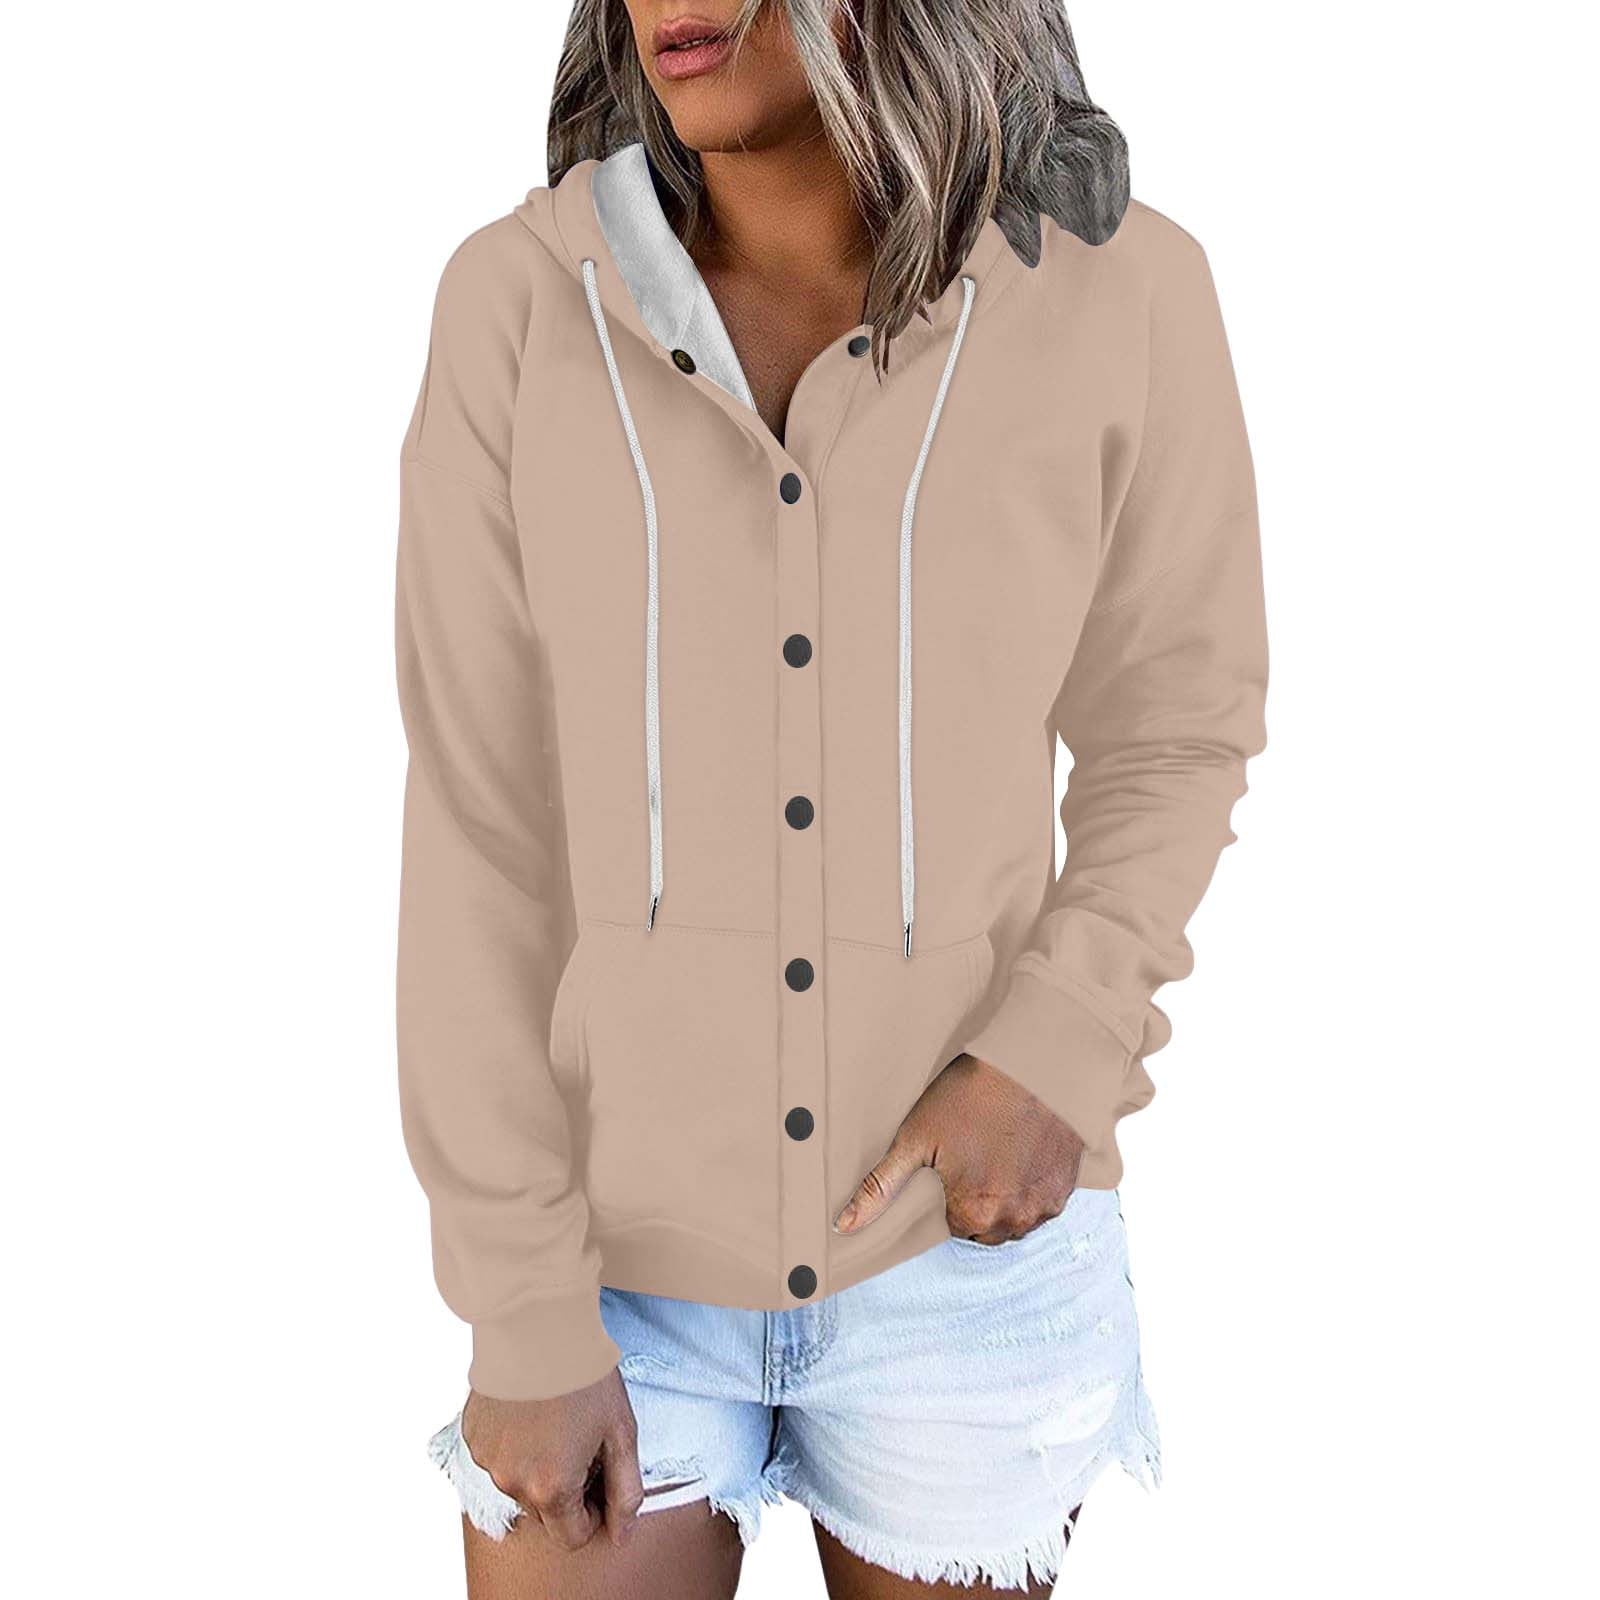 2023 Fashion Casual Brand Joma Hoodies Sweatshirt Men Women Fleece